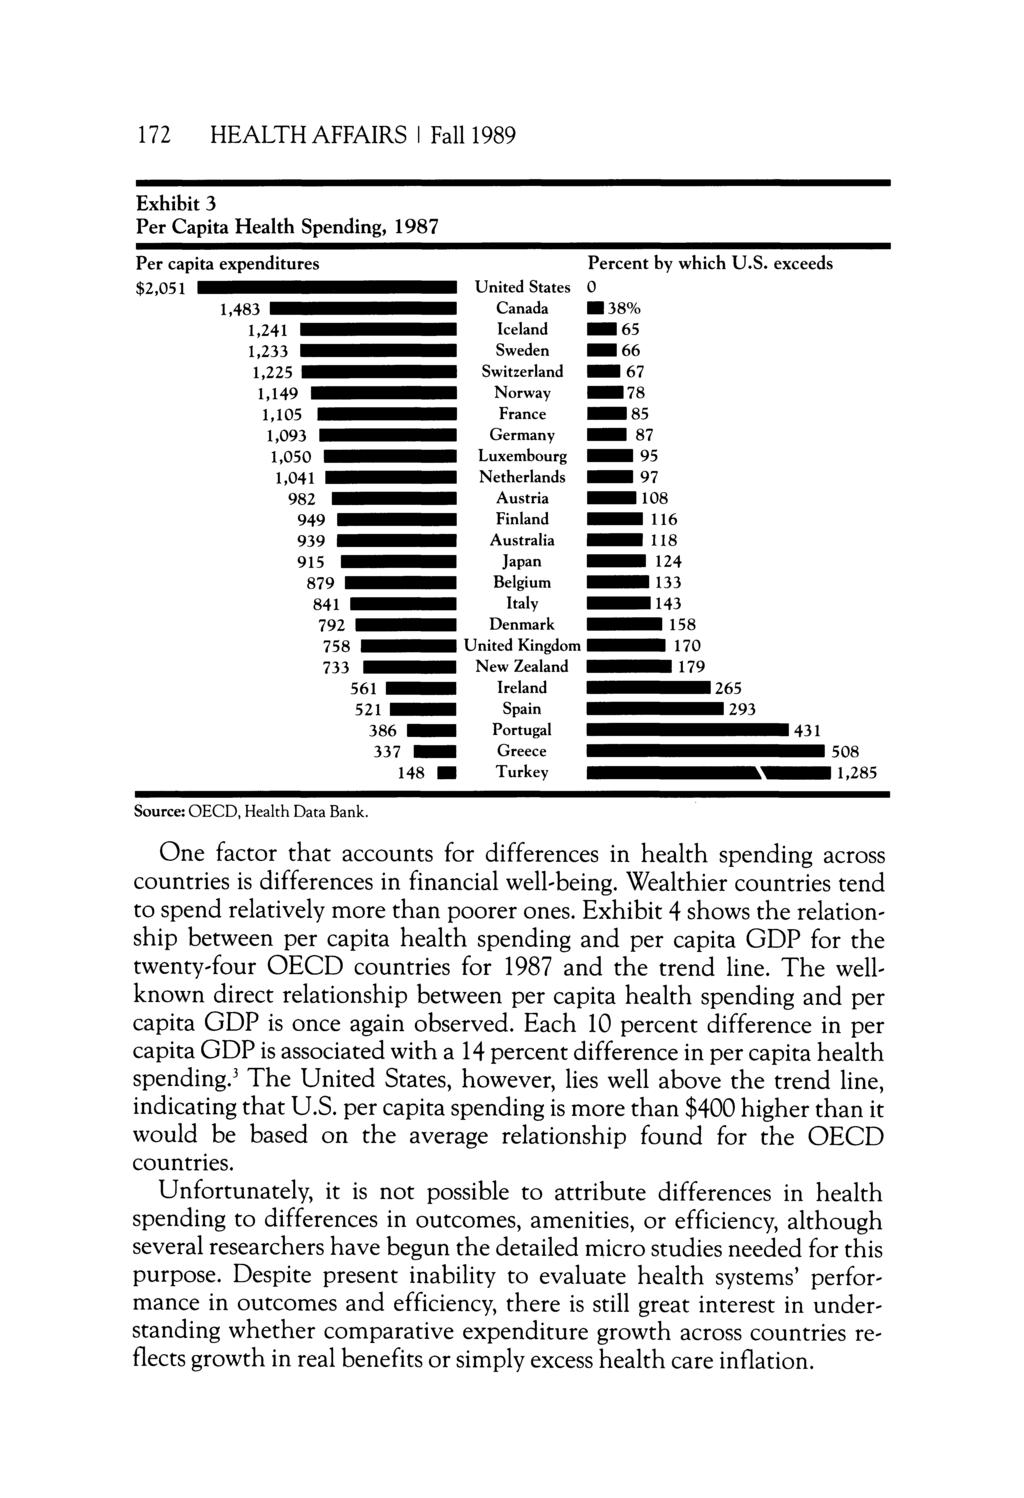 172 HEALTH AFFAIRS Fall 1989 Exhibit 3 Per Capita Health Spending, 1987 Source: OECD, Health Data Bank.